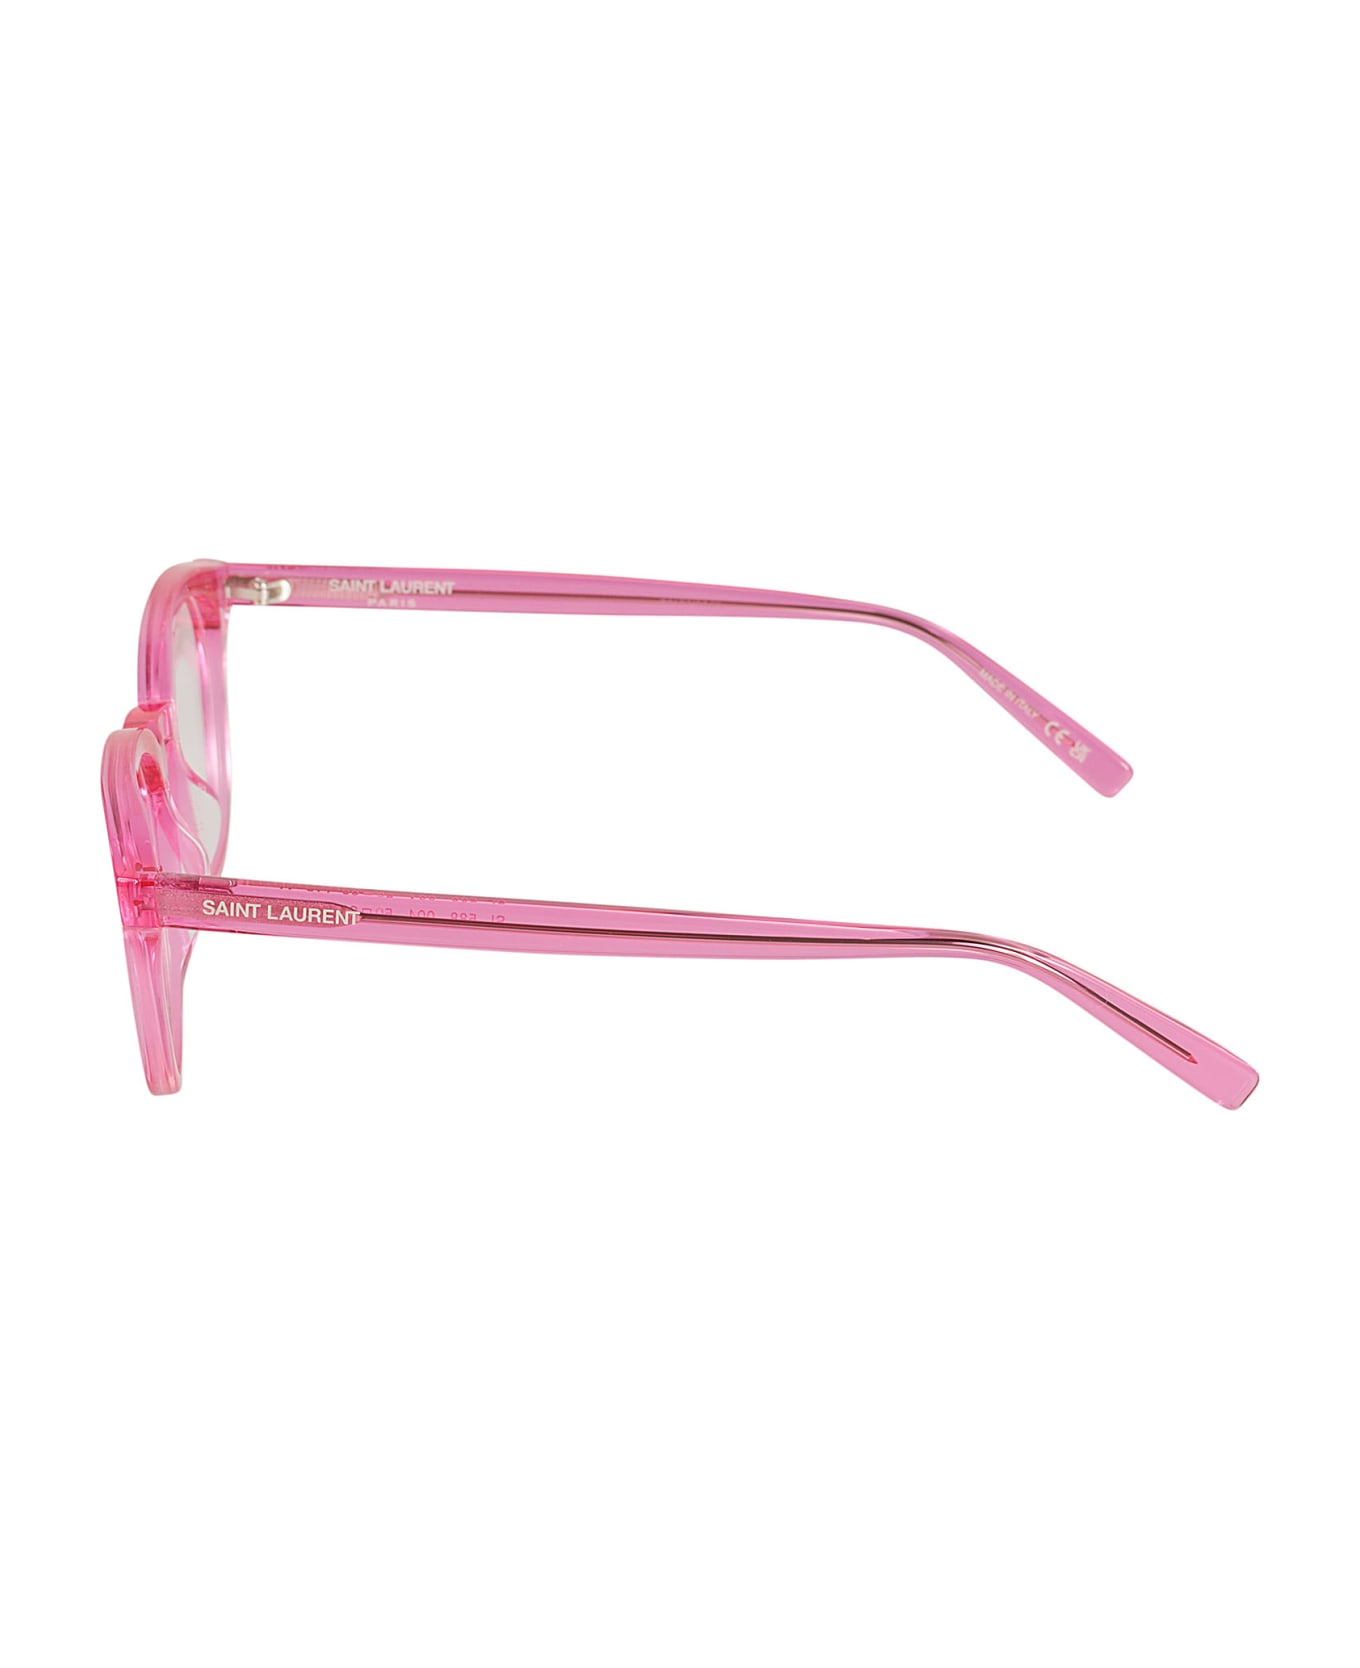 Saint Laurent Eyewear Round Frame Glasses - Fuchsia/Transparent